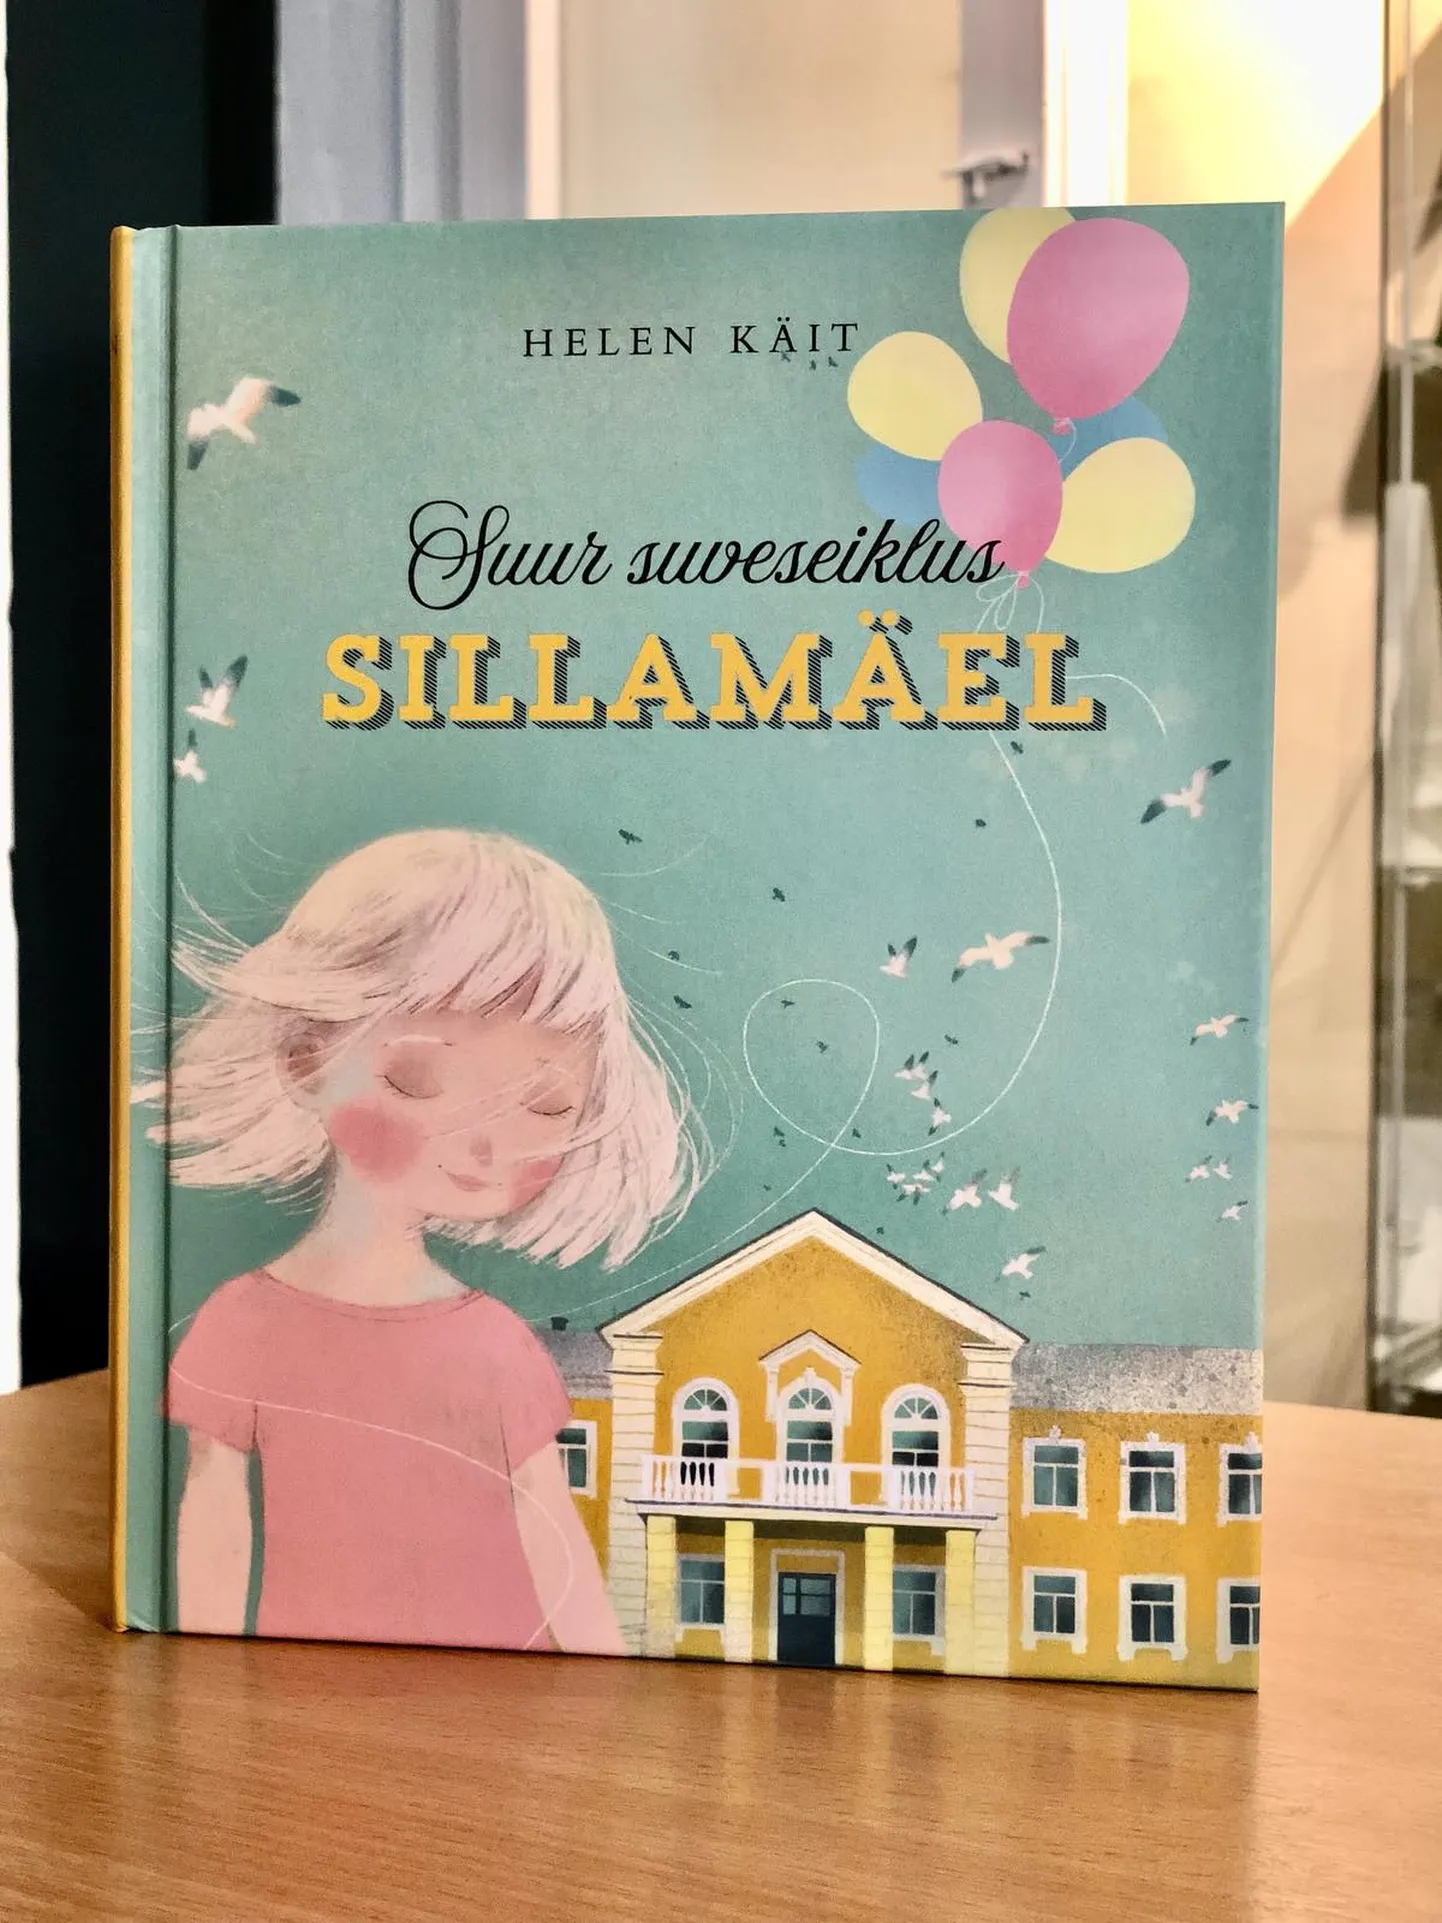 Книга адресована детям 6-12 лет и издана на эстонском языке.